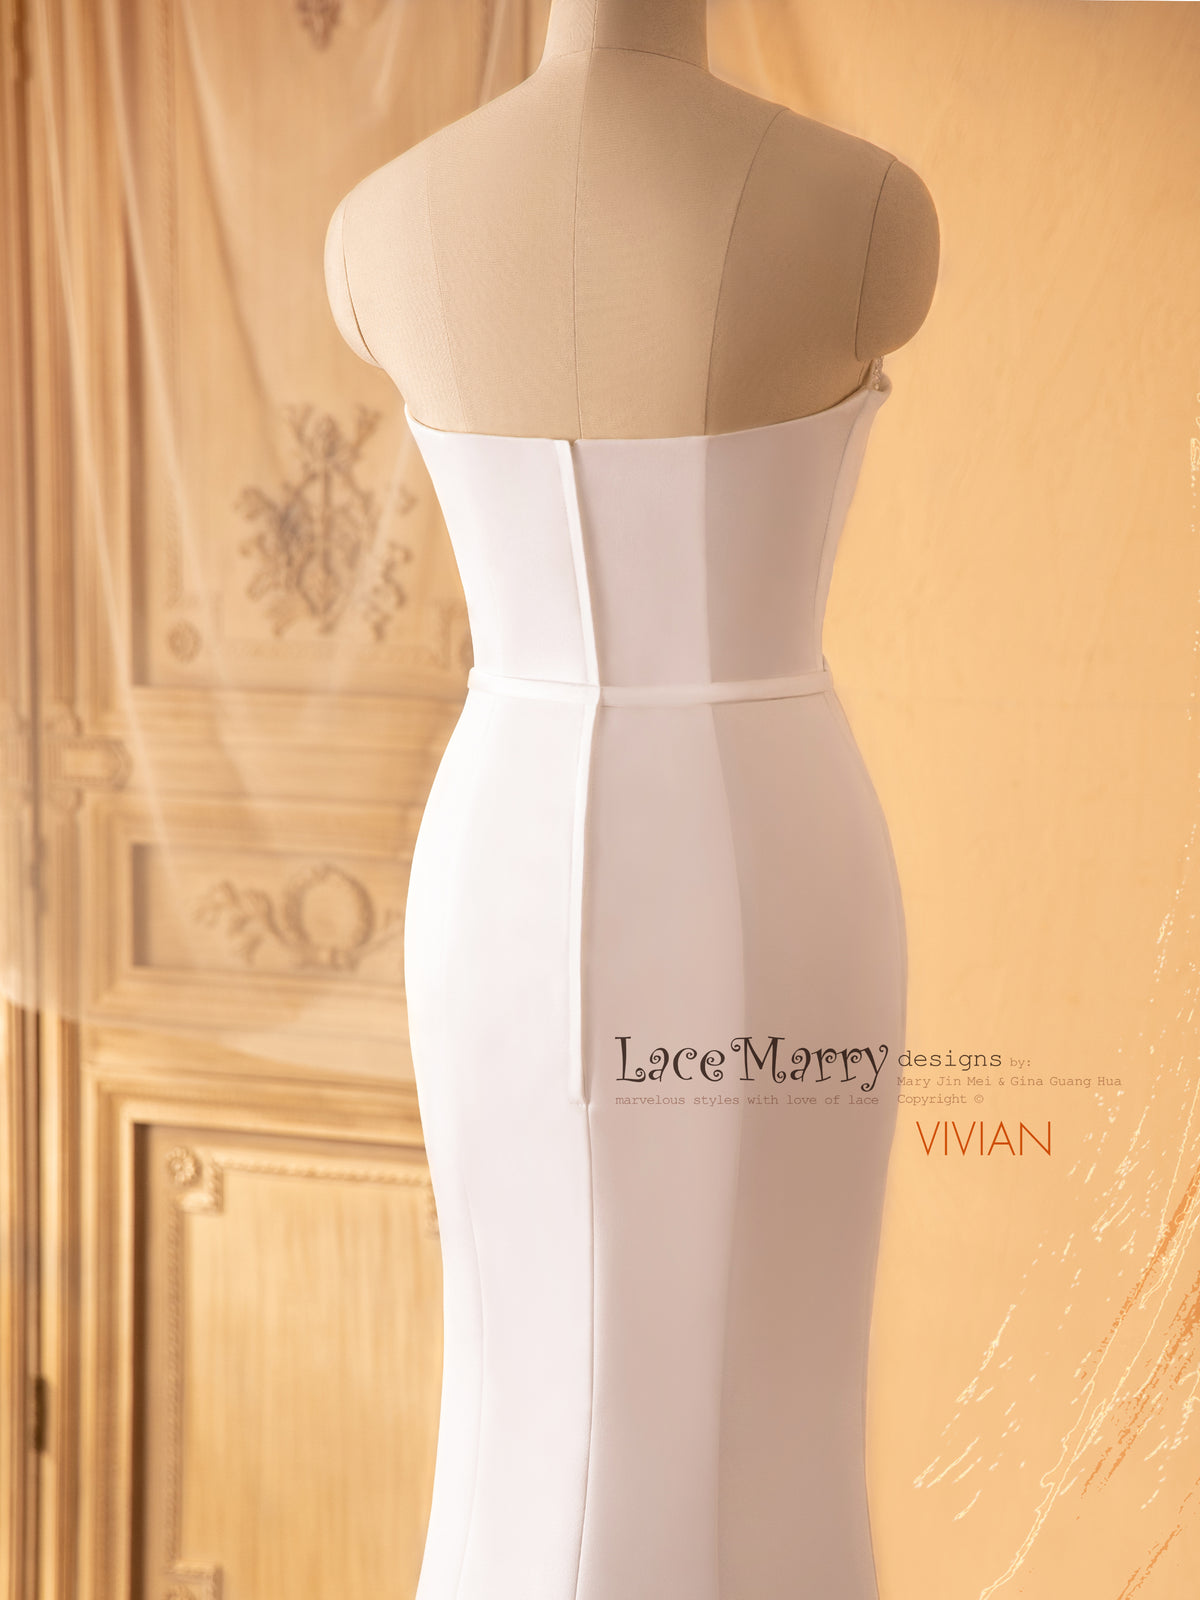 VIVIAN / Plain Wedding Dress with Folded Neckline Design